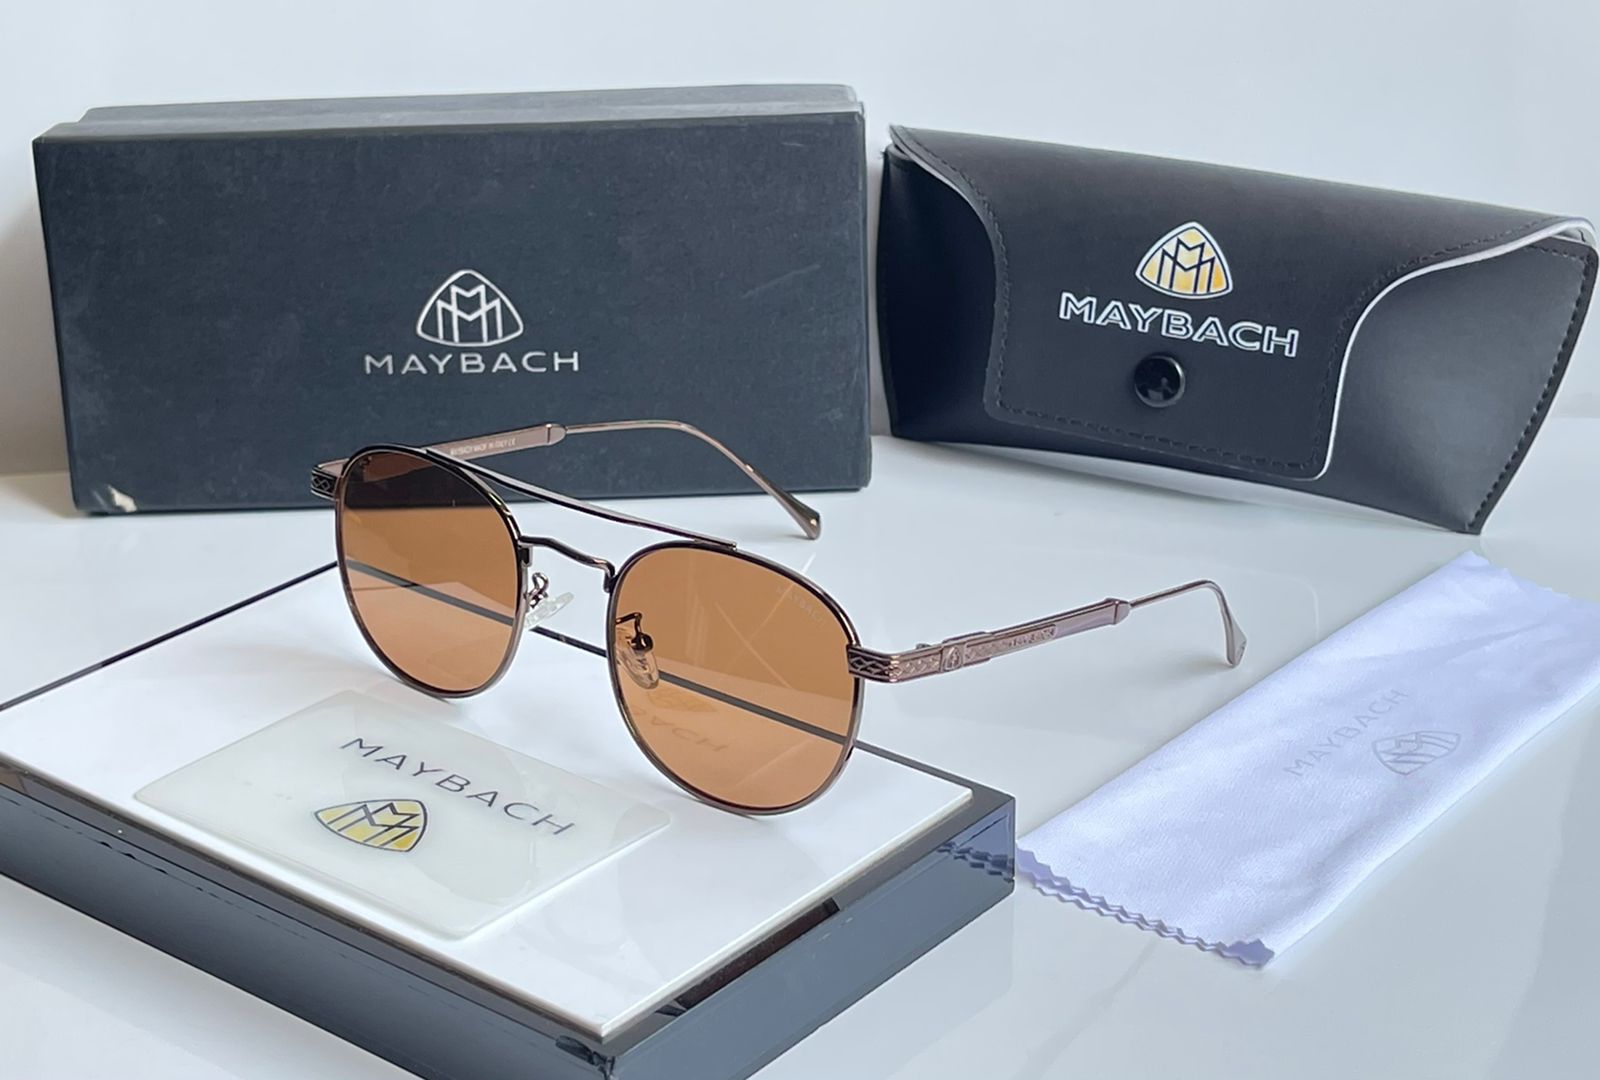 Premium Quality Round Shape UV Protected Sunglasses